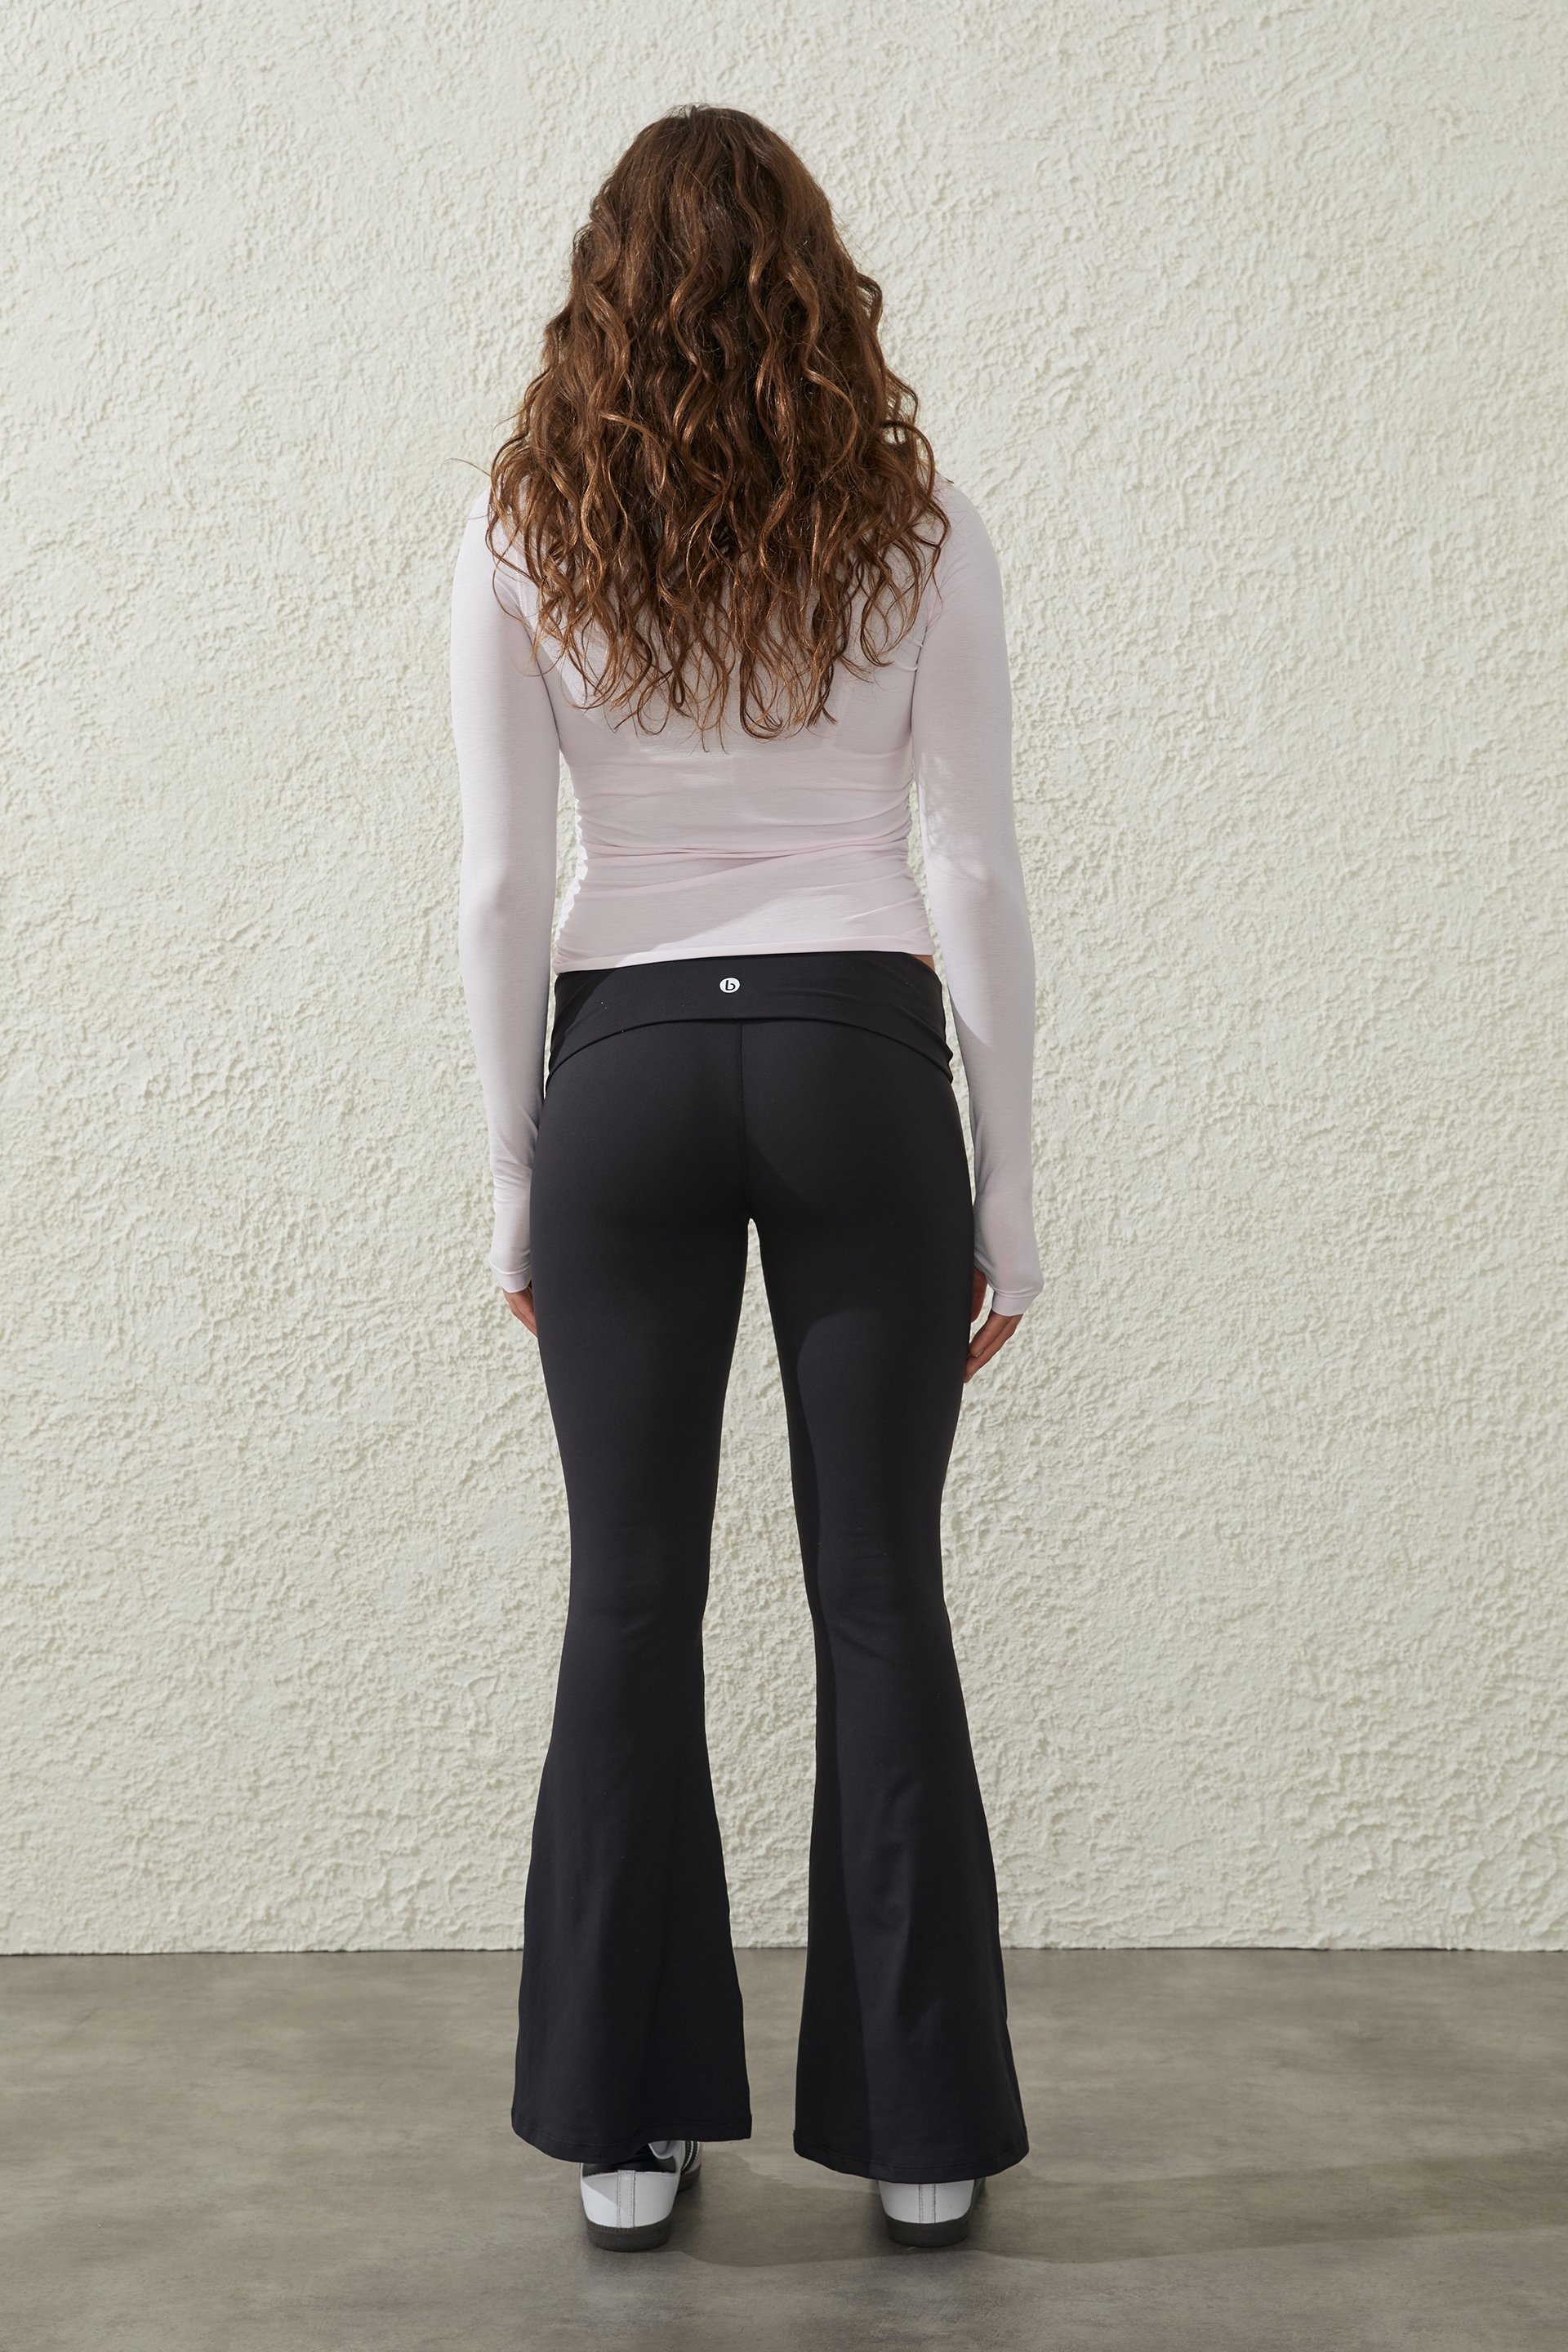 Flare Leggings for Women - Casual Soft Slim Fit Fold Over Waist